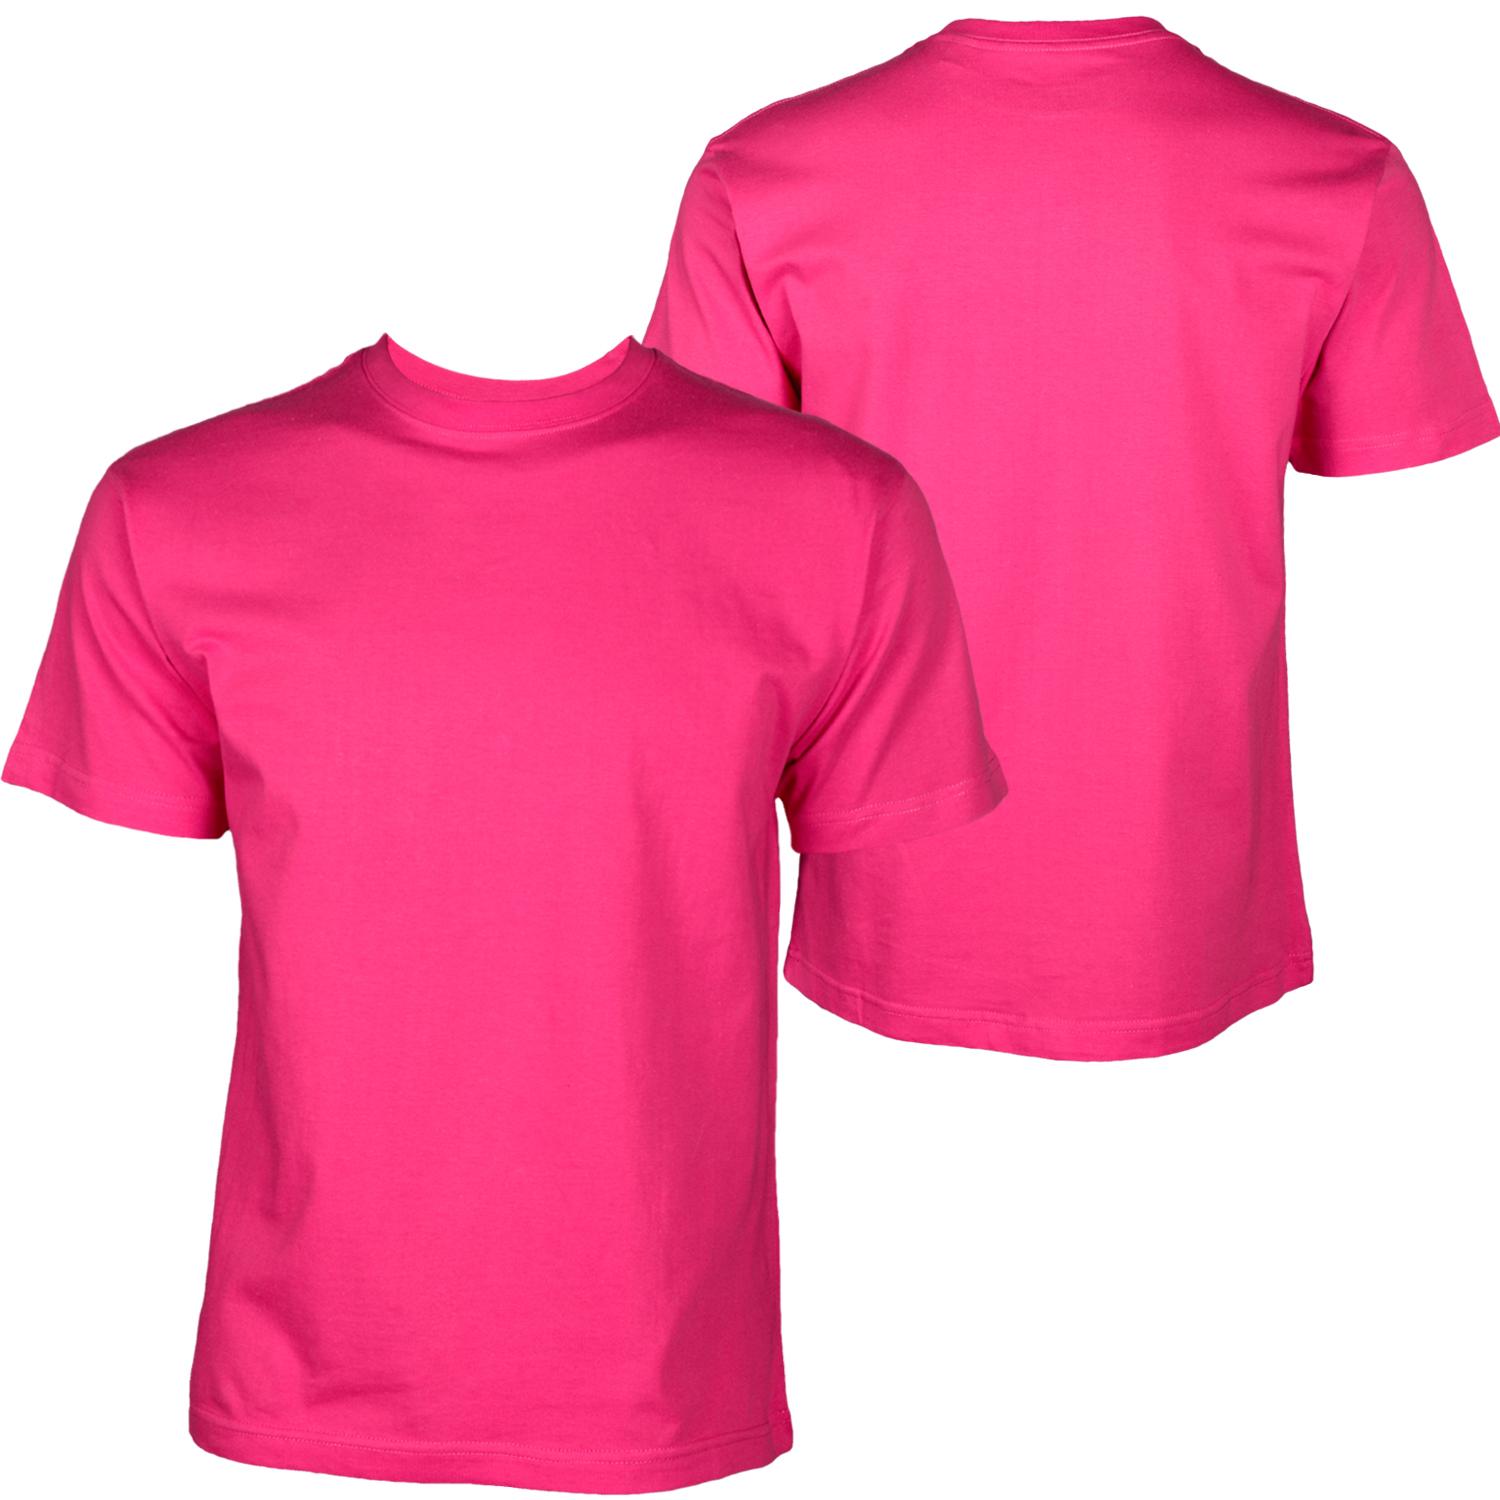 Foto Shmack Shmack Shmack Basic Blank T-shirt Pink Pink Camisetas Rosa